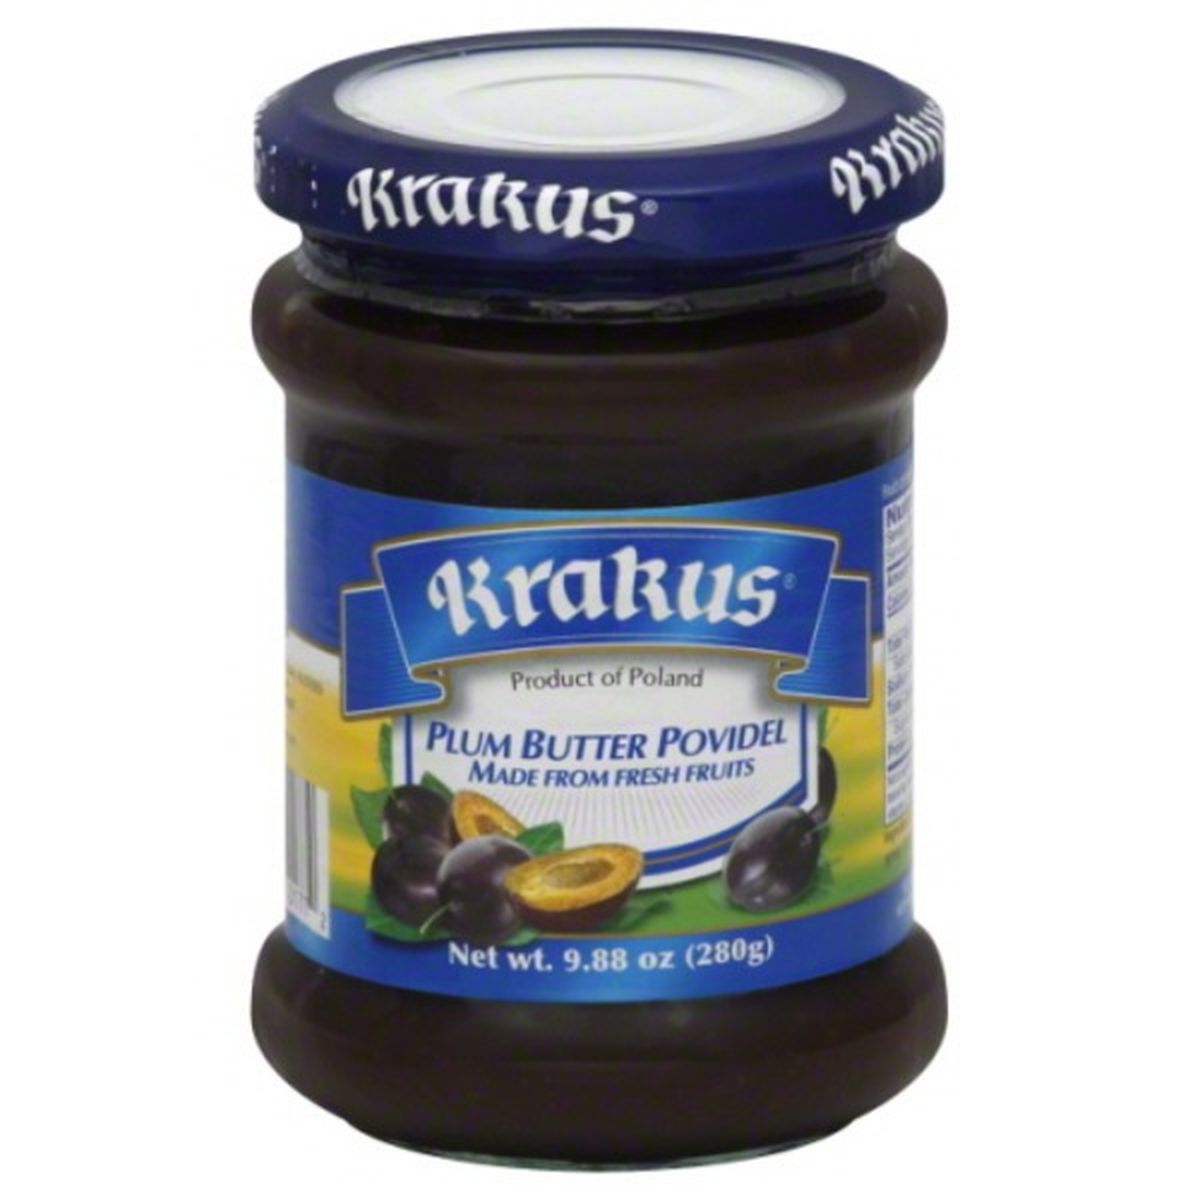 Calories in Krakus Povidel, Plum Butter